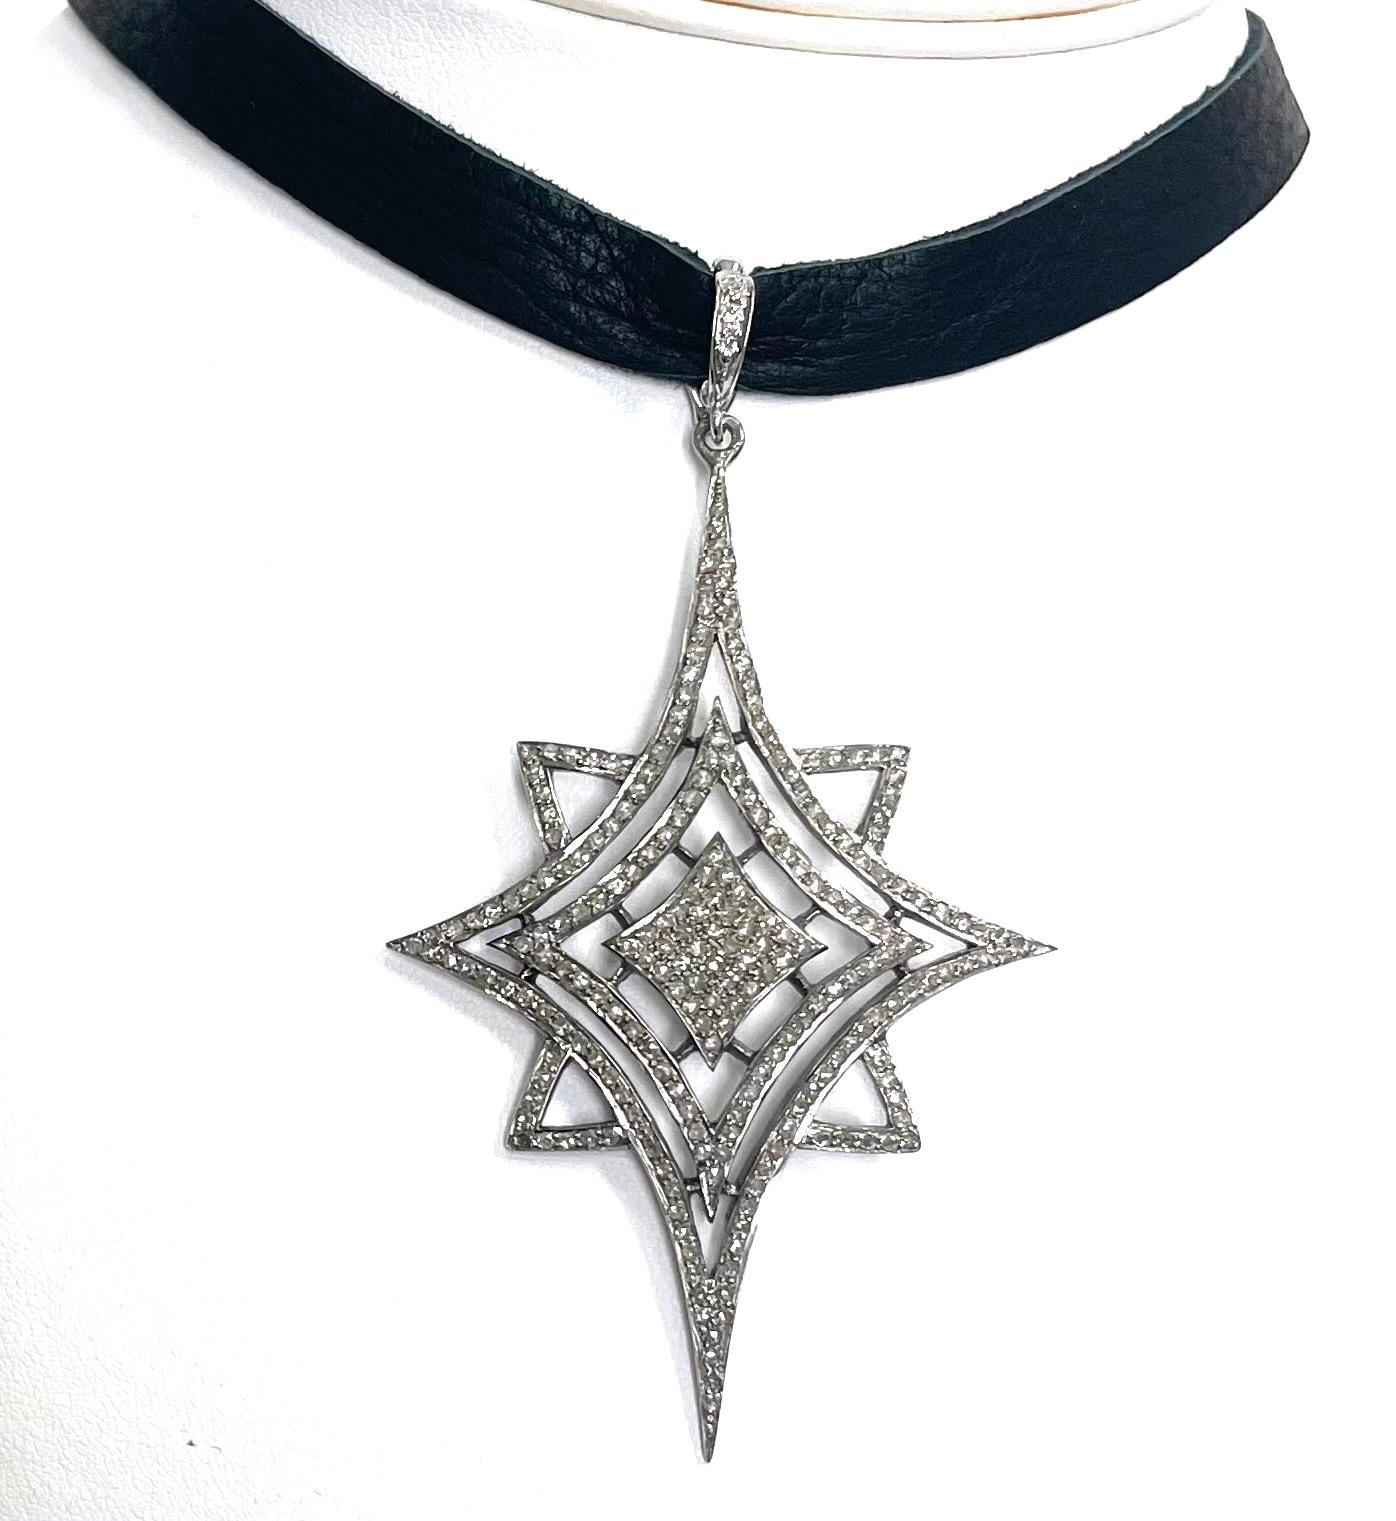  Pave Diamond Starburst Pendant on Deerskin Choker Necklace For Sale 5